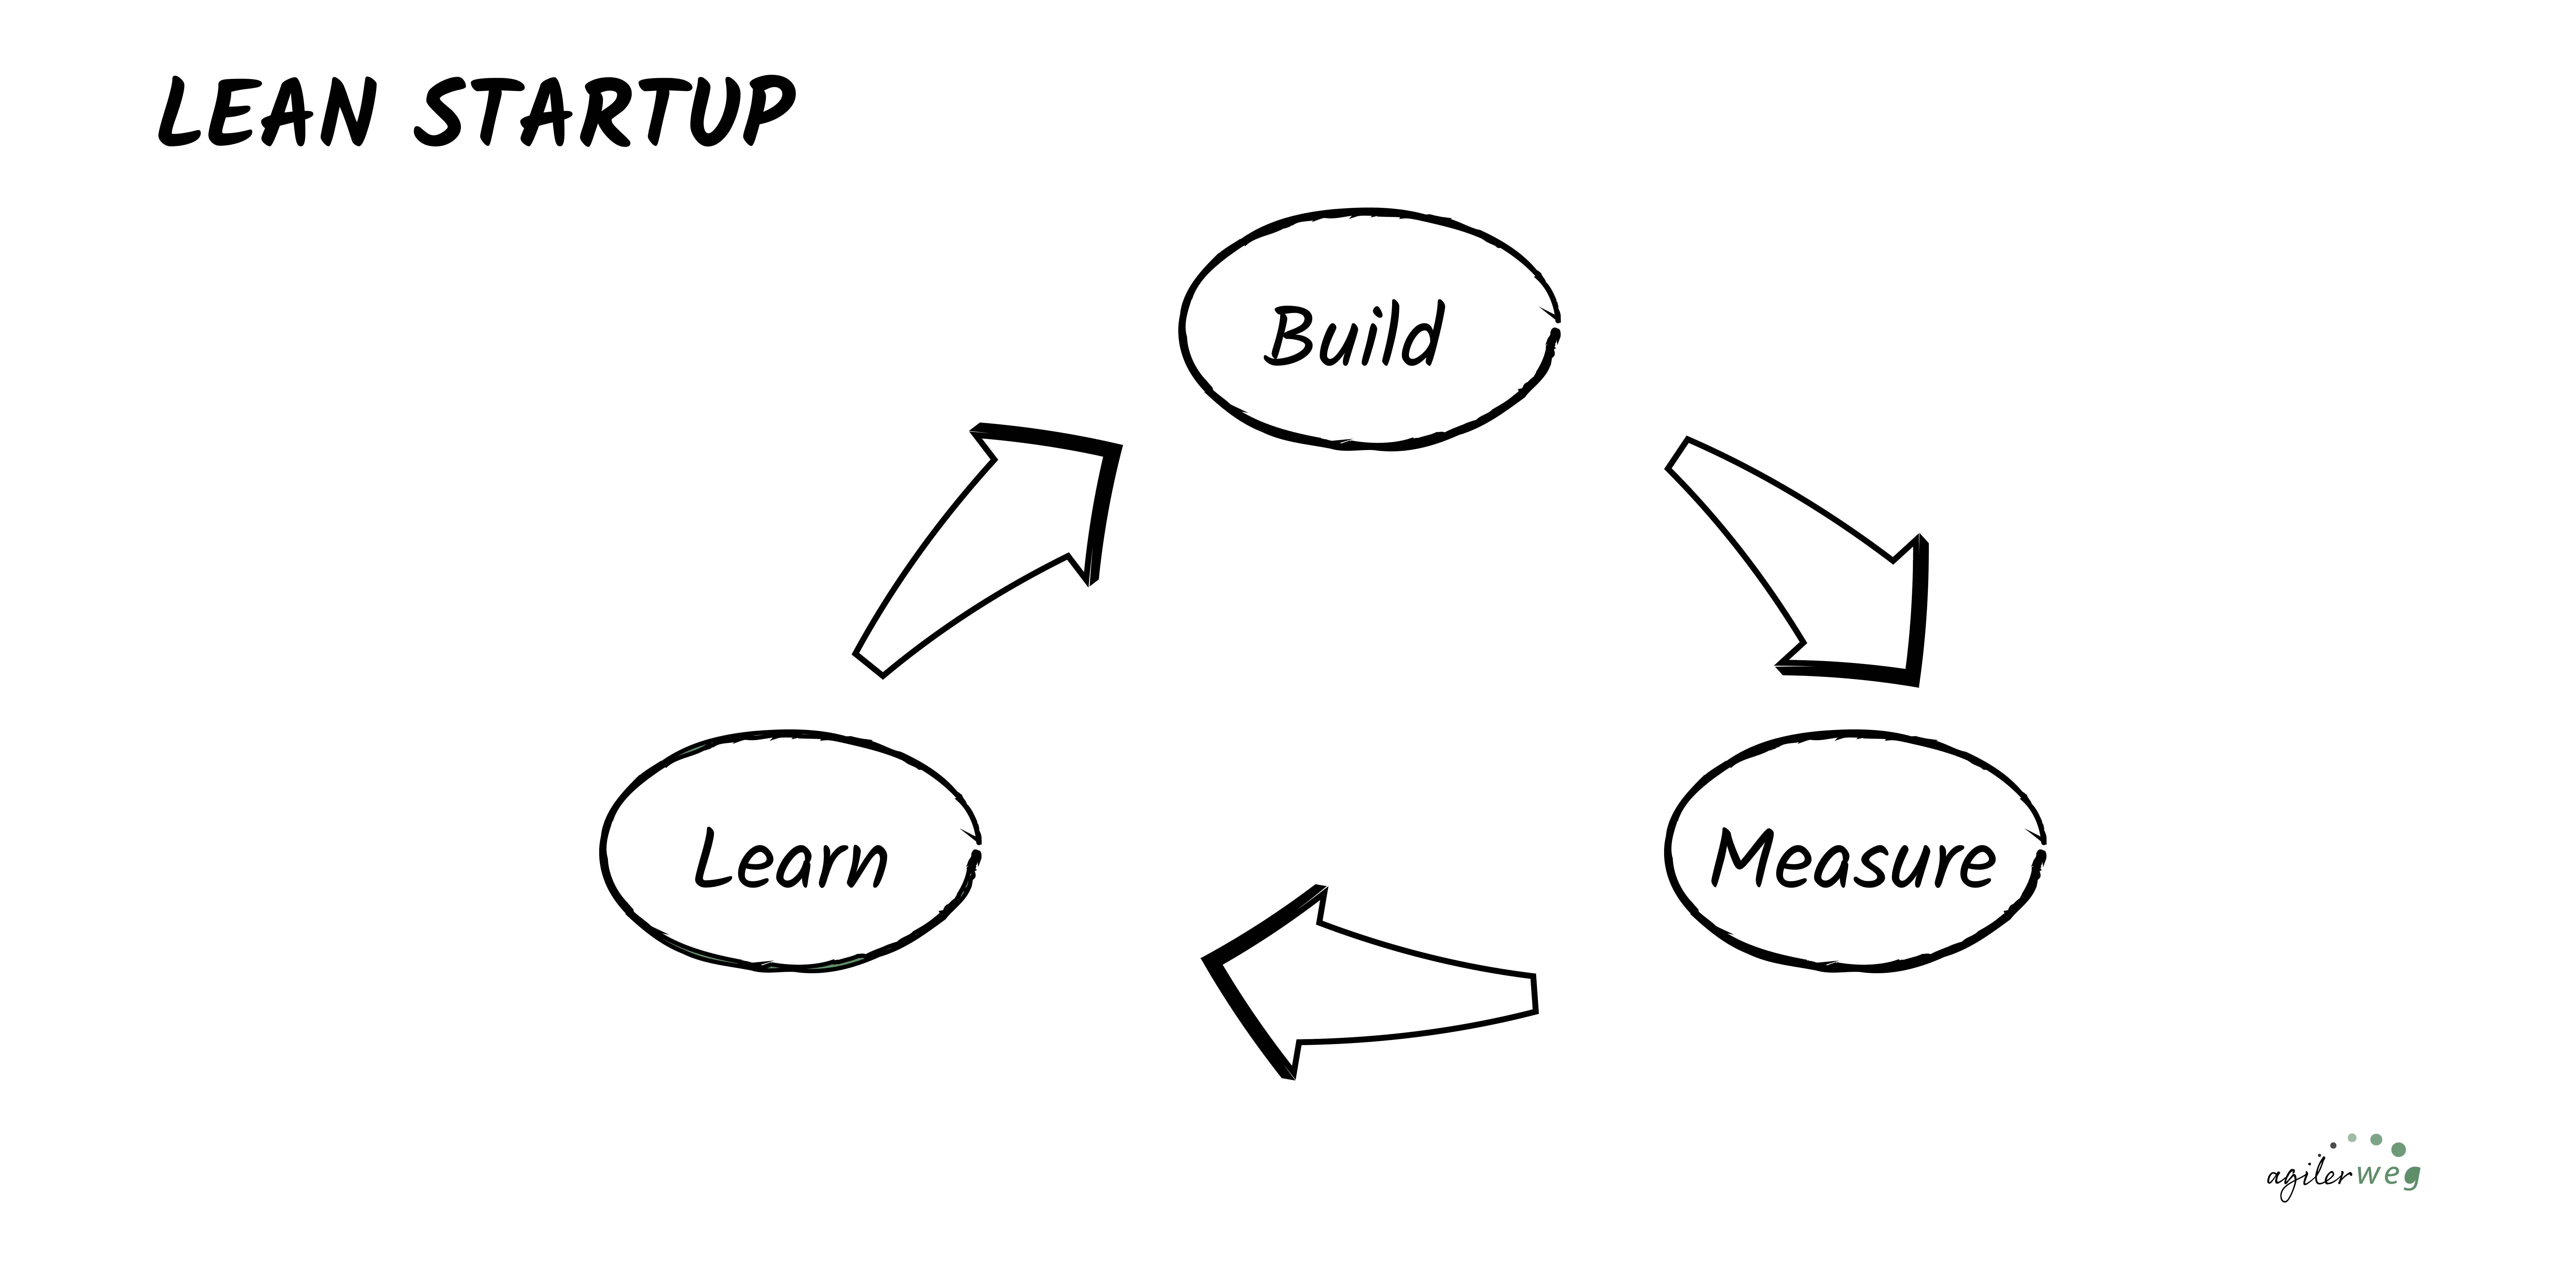 lean startup methode